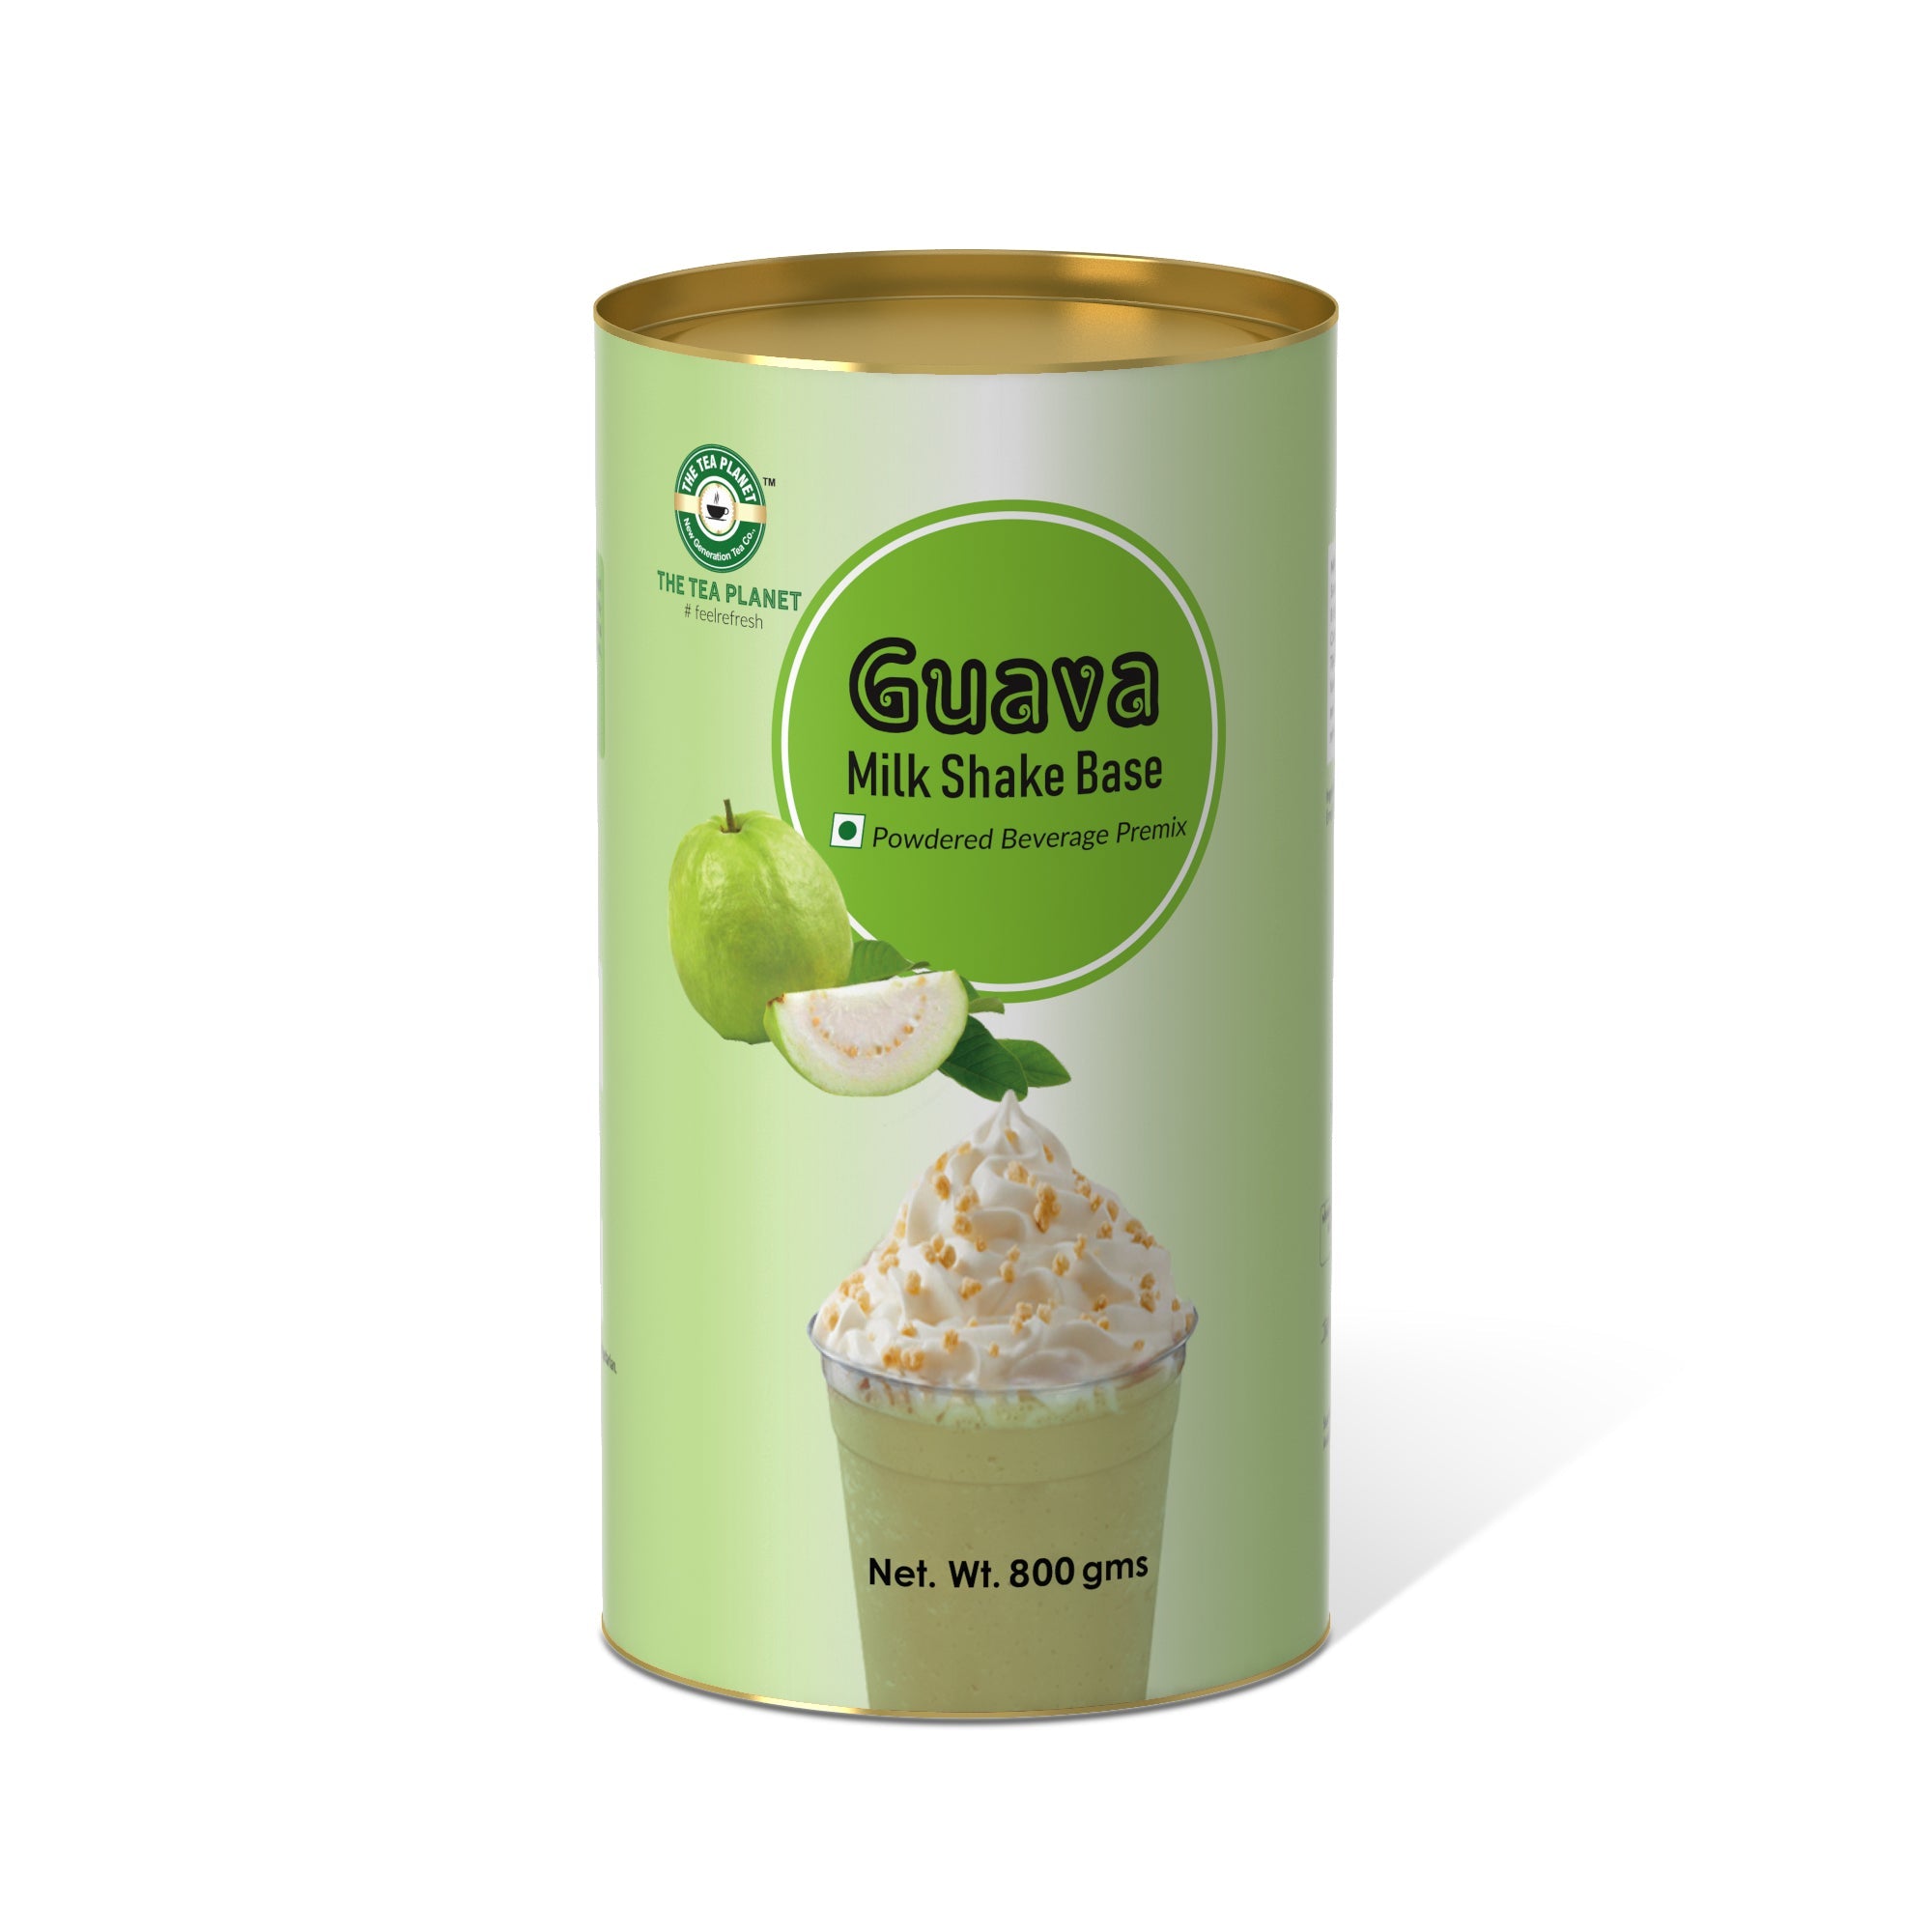 Guava Milkshake Mix - 250 gms